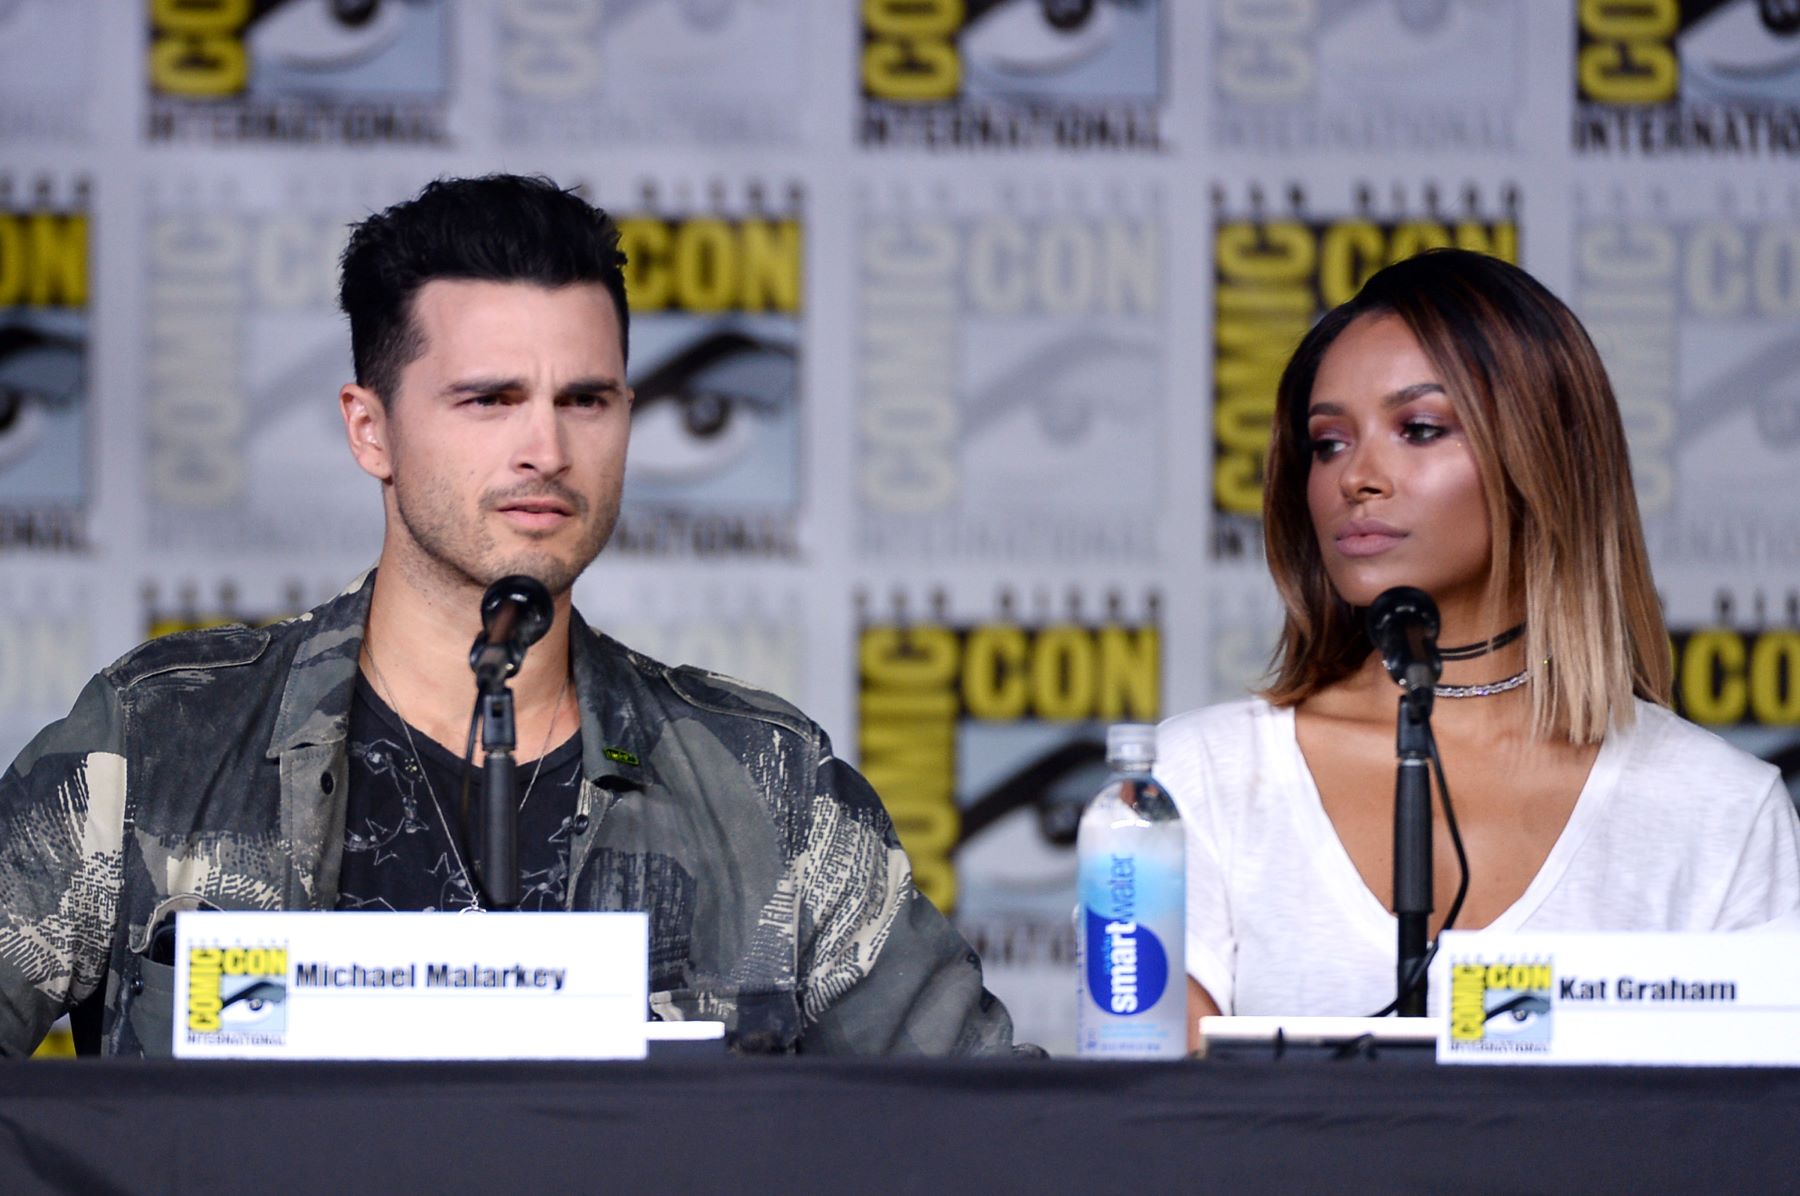 Michael Malarkey and Kat Graham of 'The Vampire Diaries' at Comic-Con International 2016 in San Diego, California